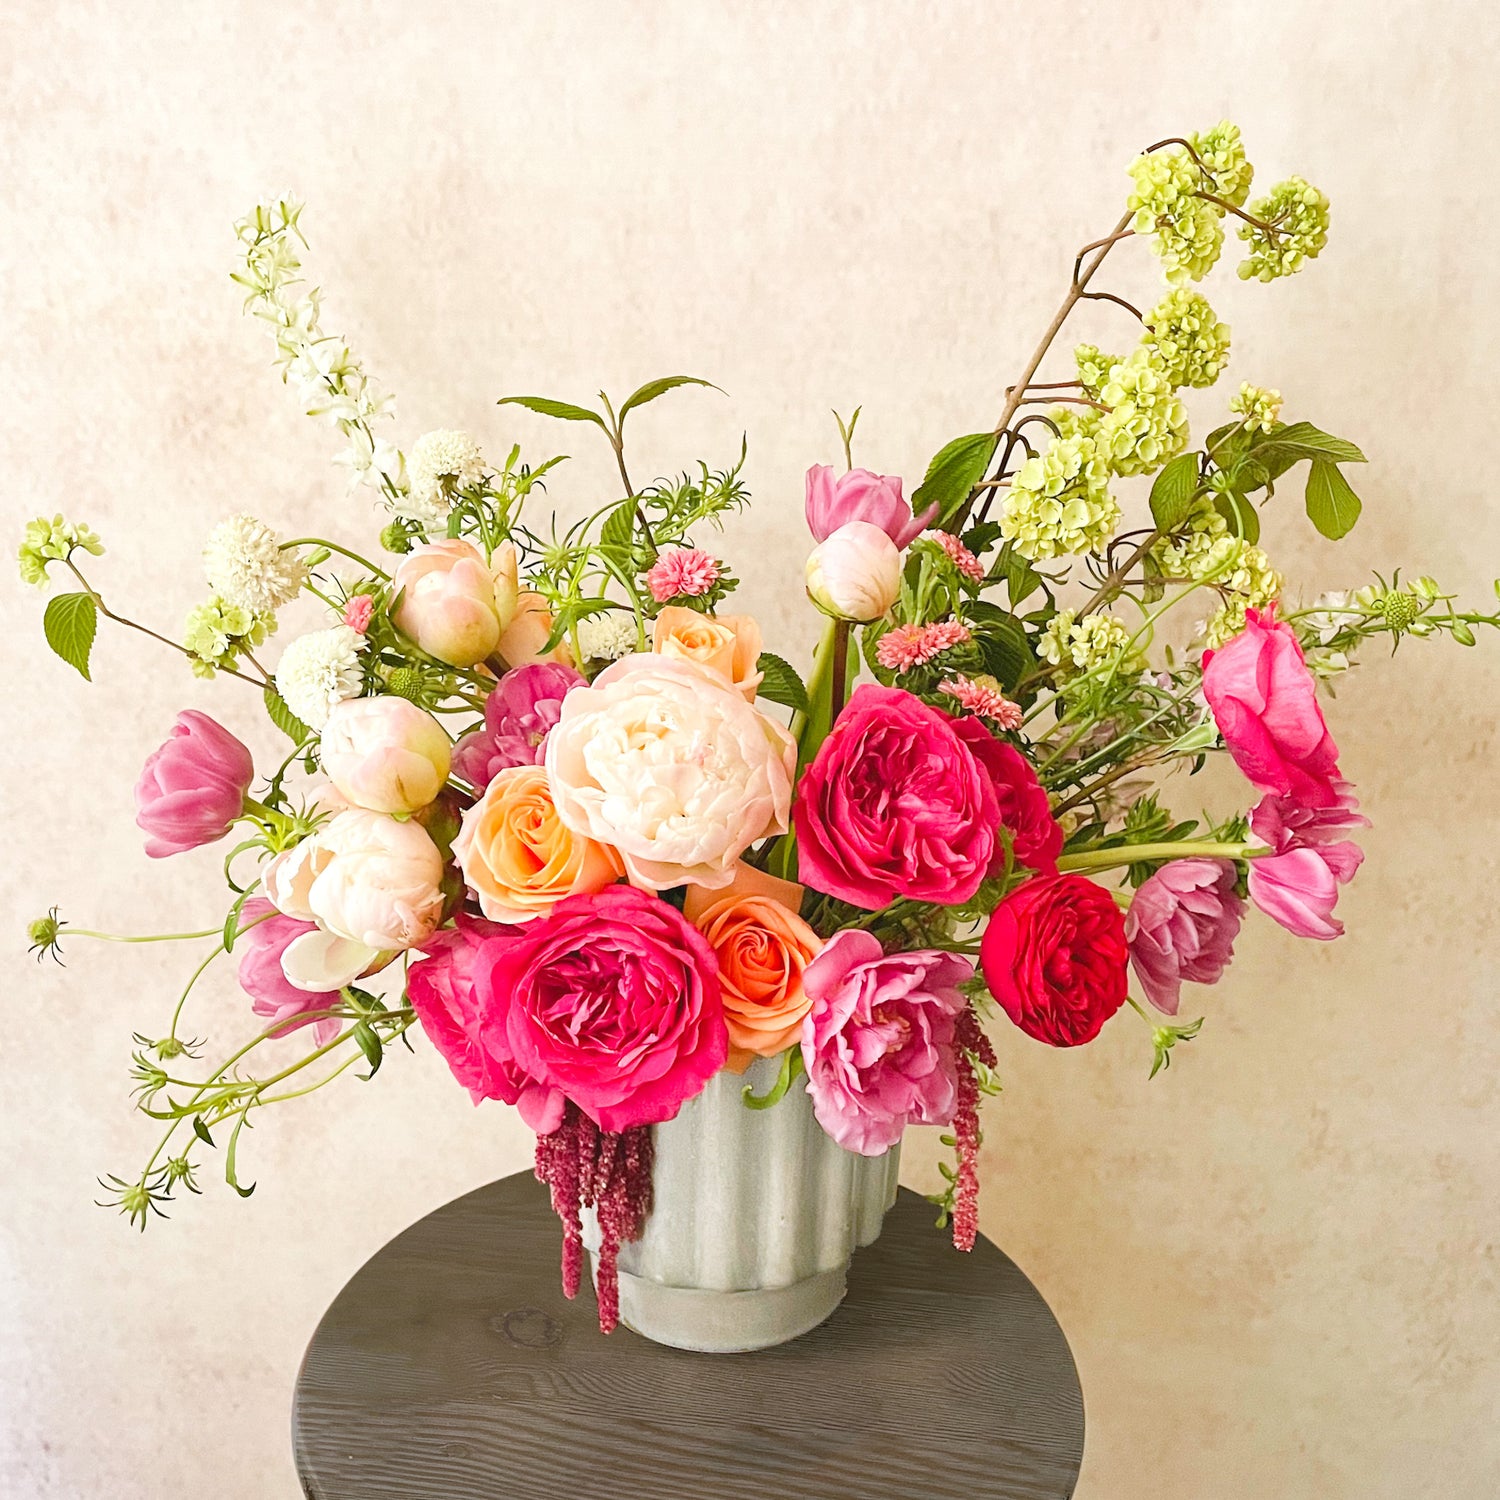 Alora Custom designed bouquet roses peonies double tulips